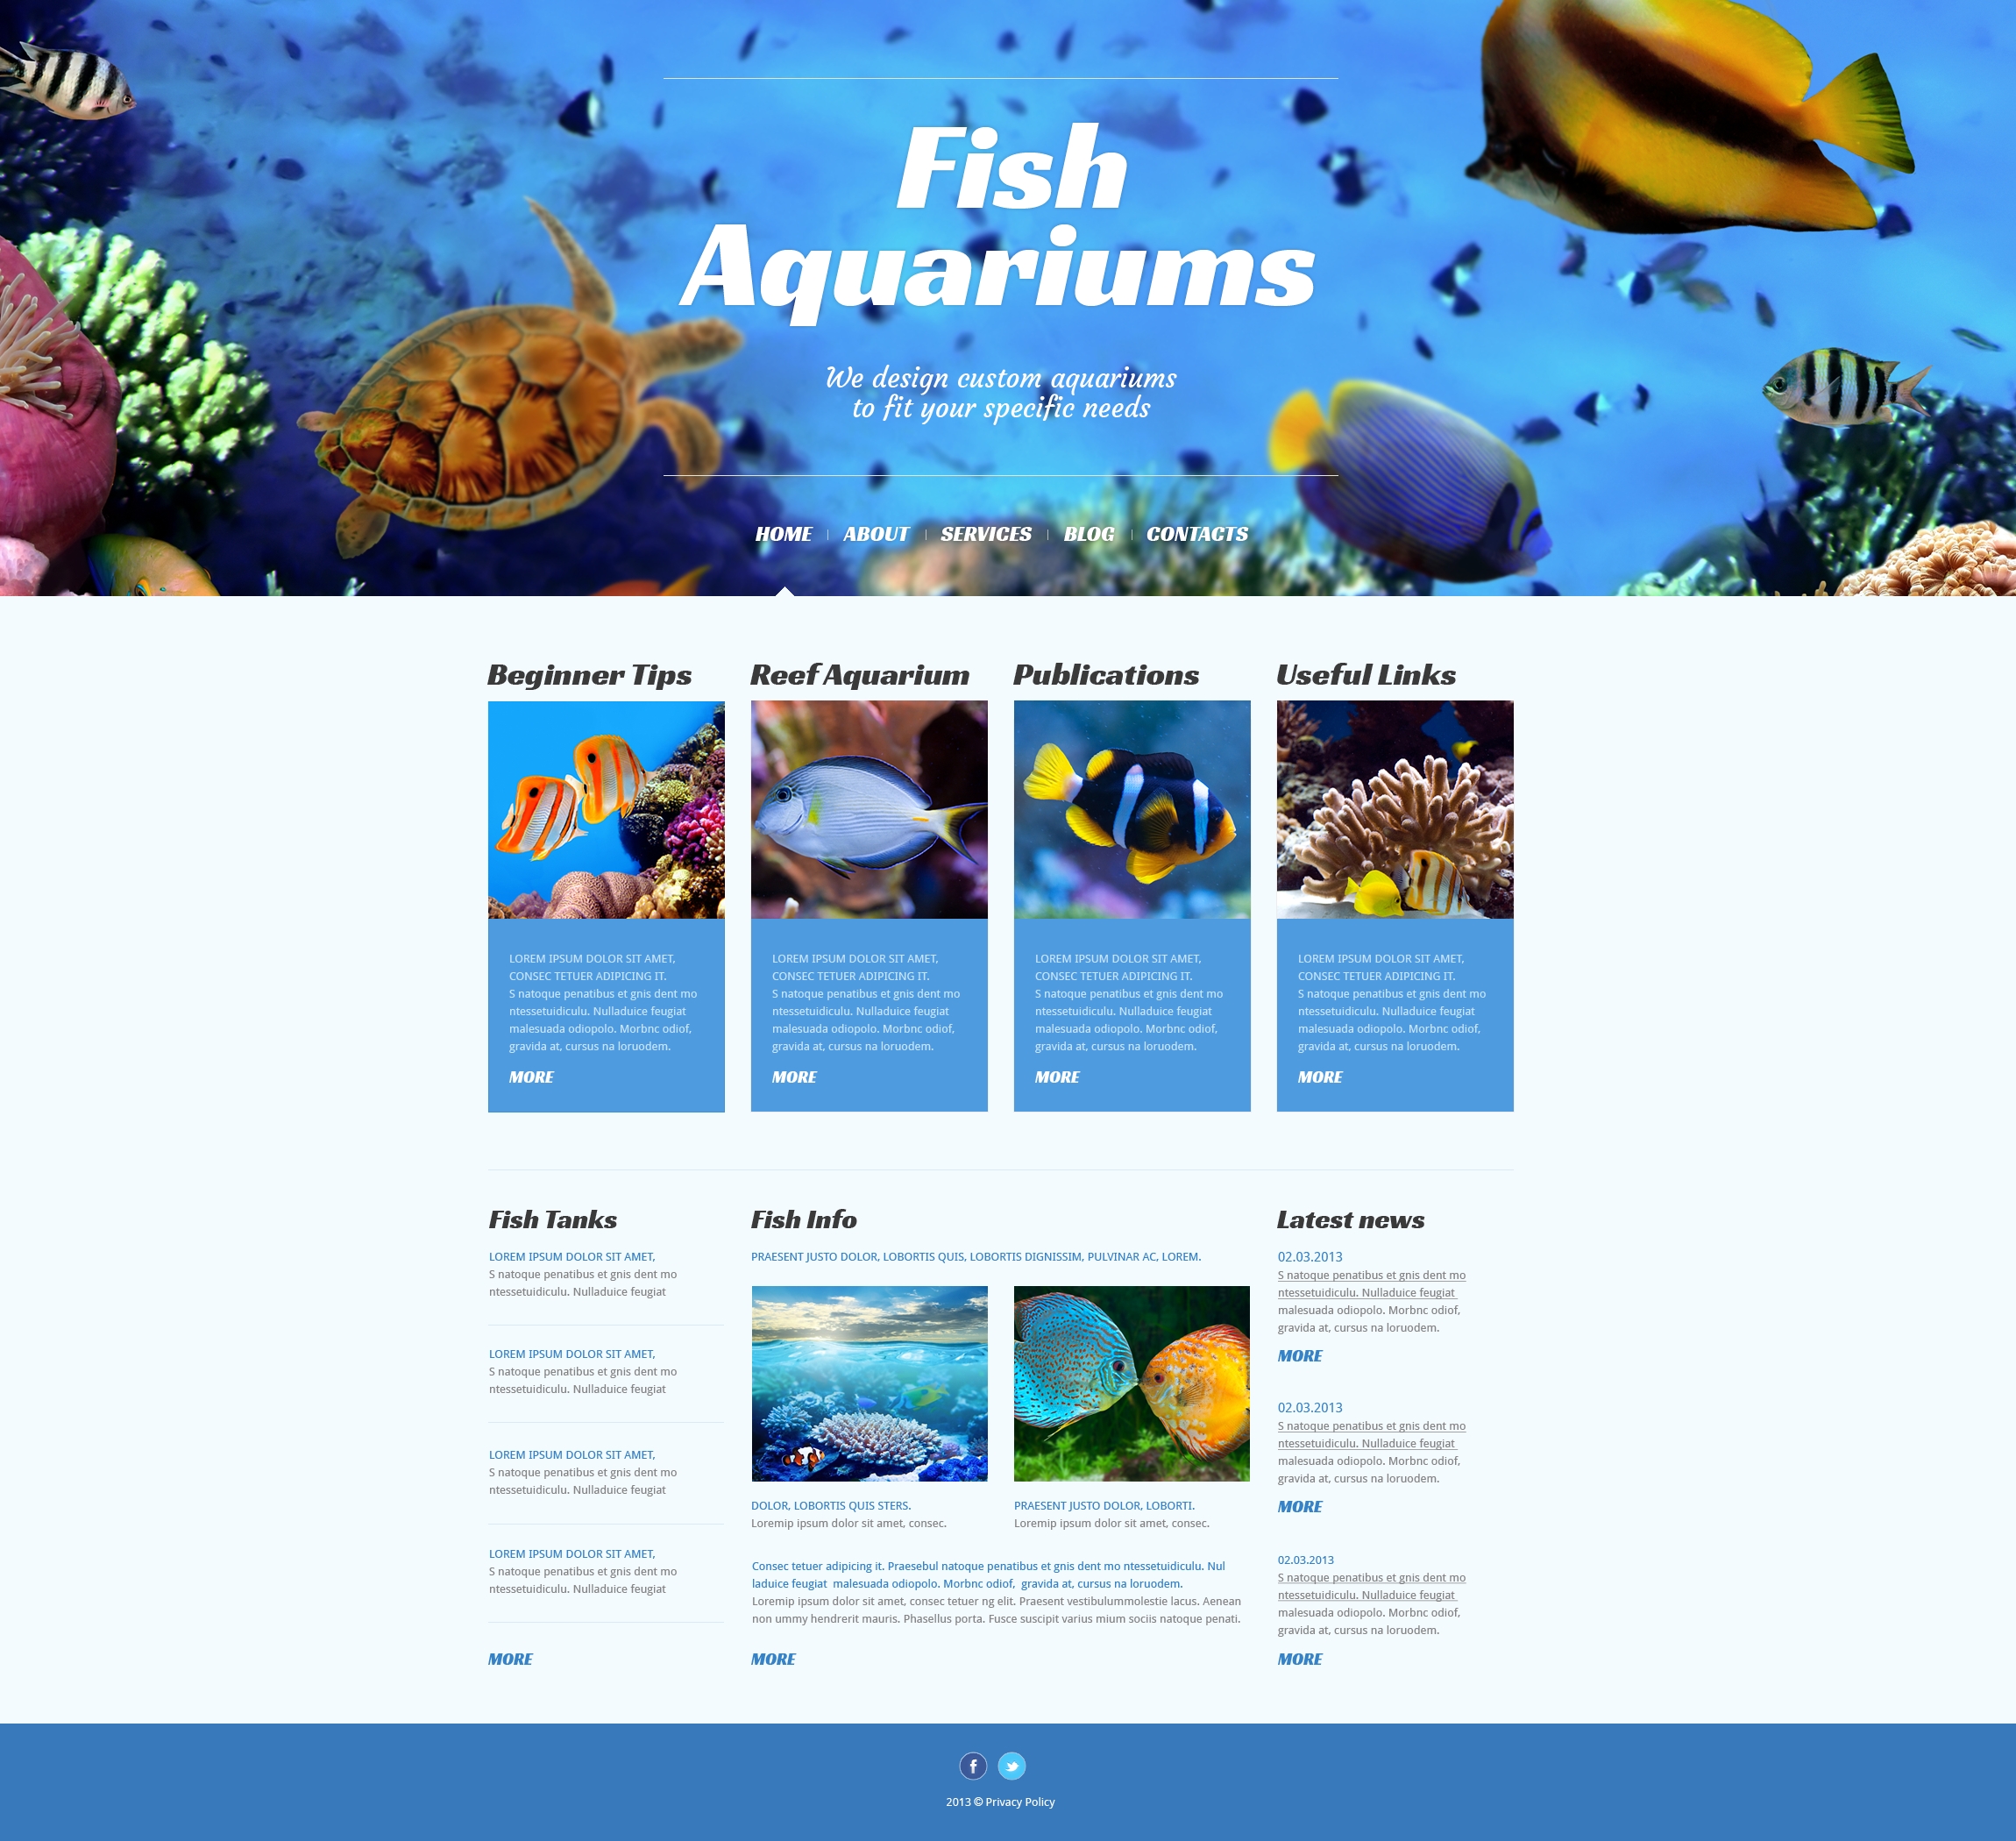 Fish Responsive WordPress Theme